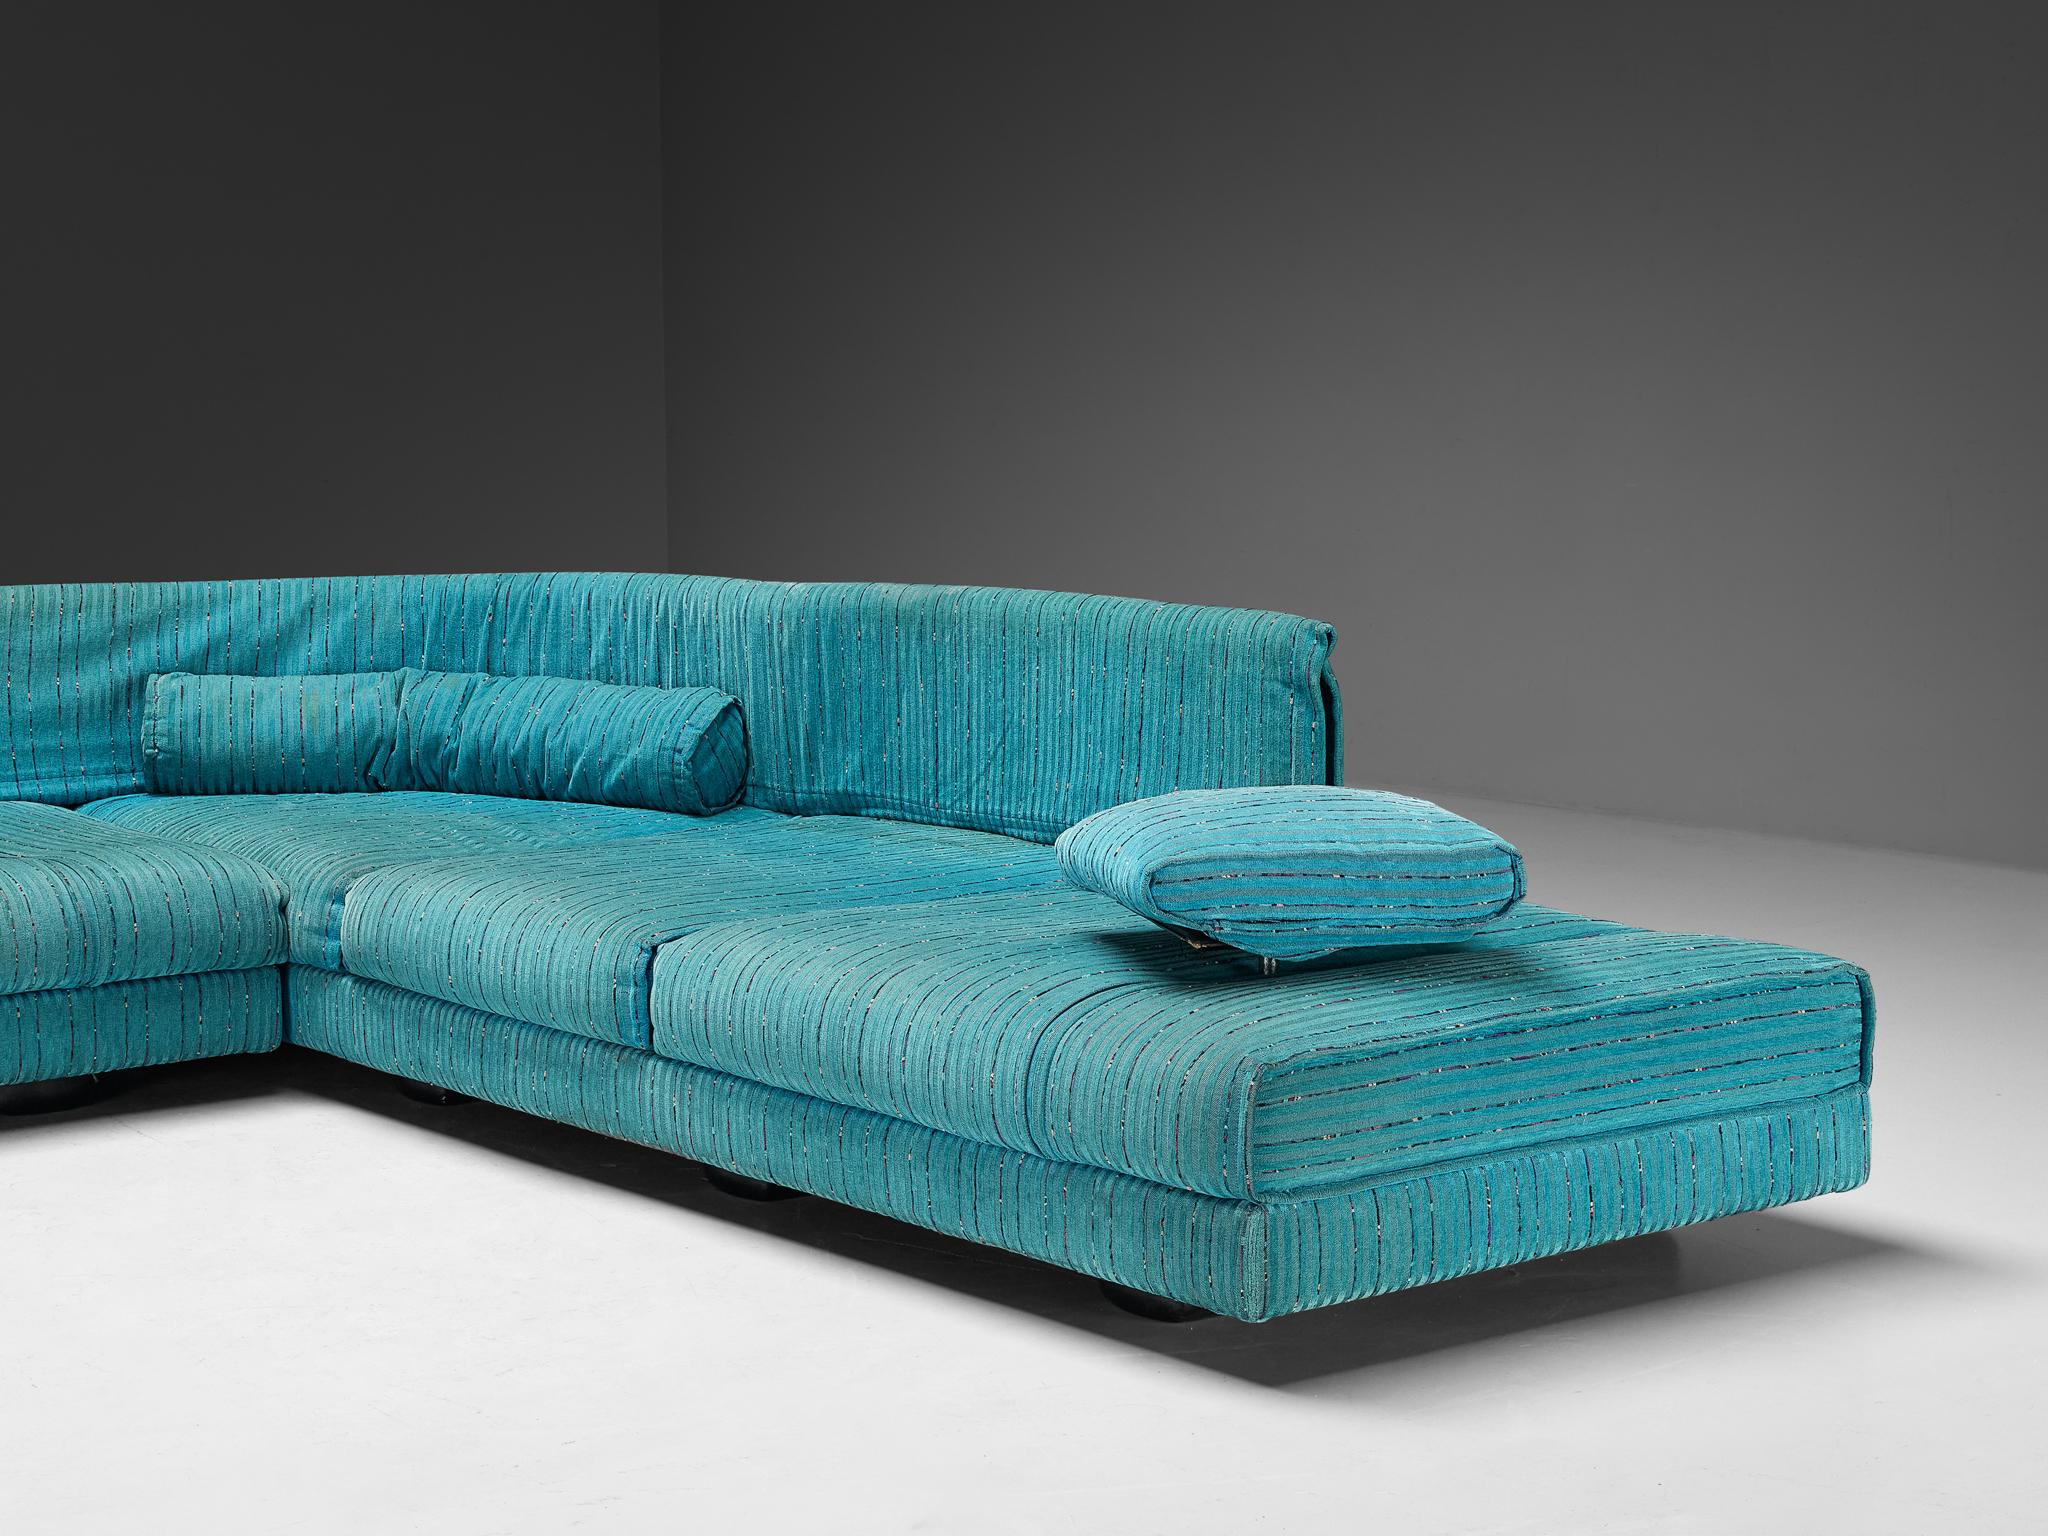 Italian Mauro Lipparini for Saporiti 'Avedon' Sofa in Turquoise Upholstery For Sale